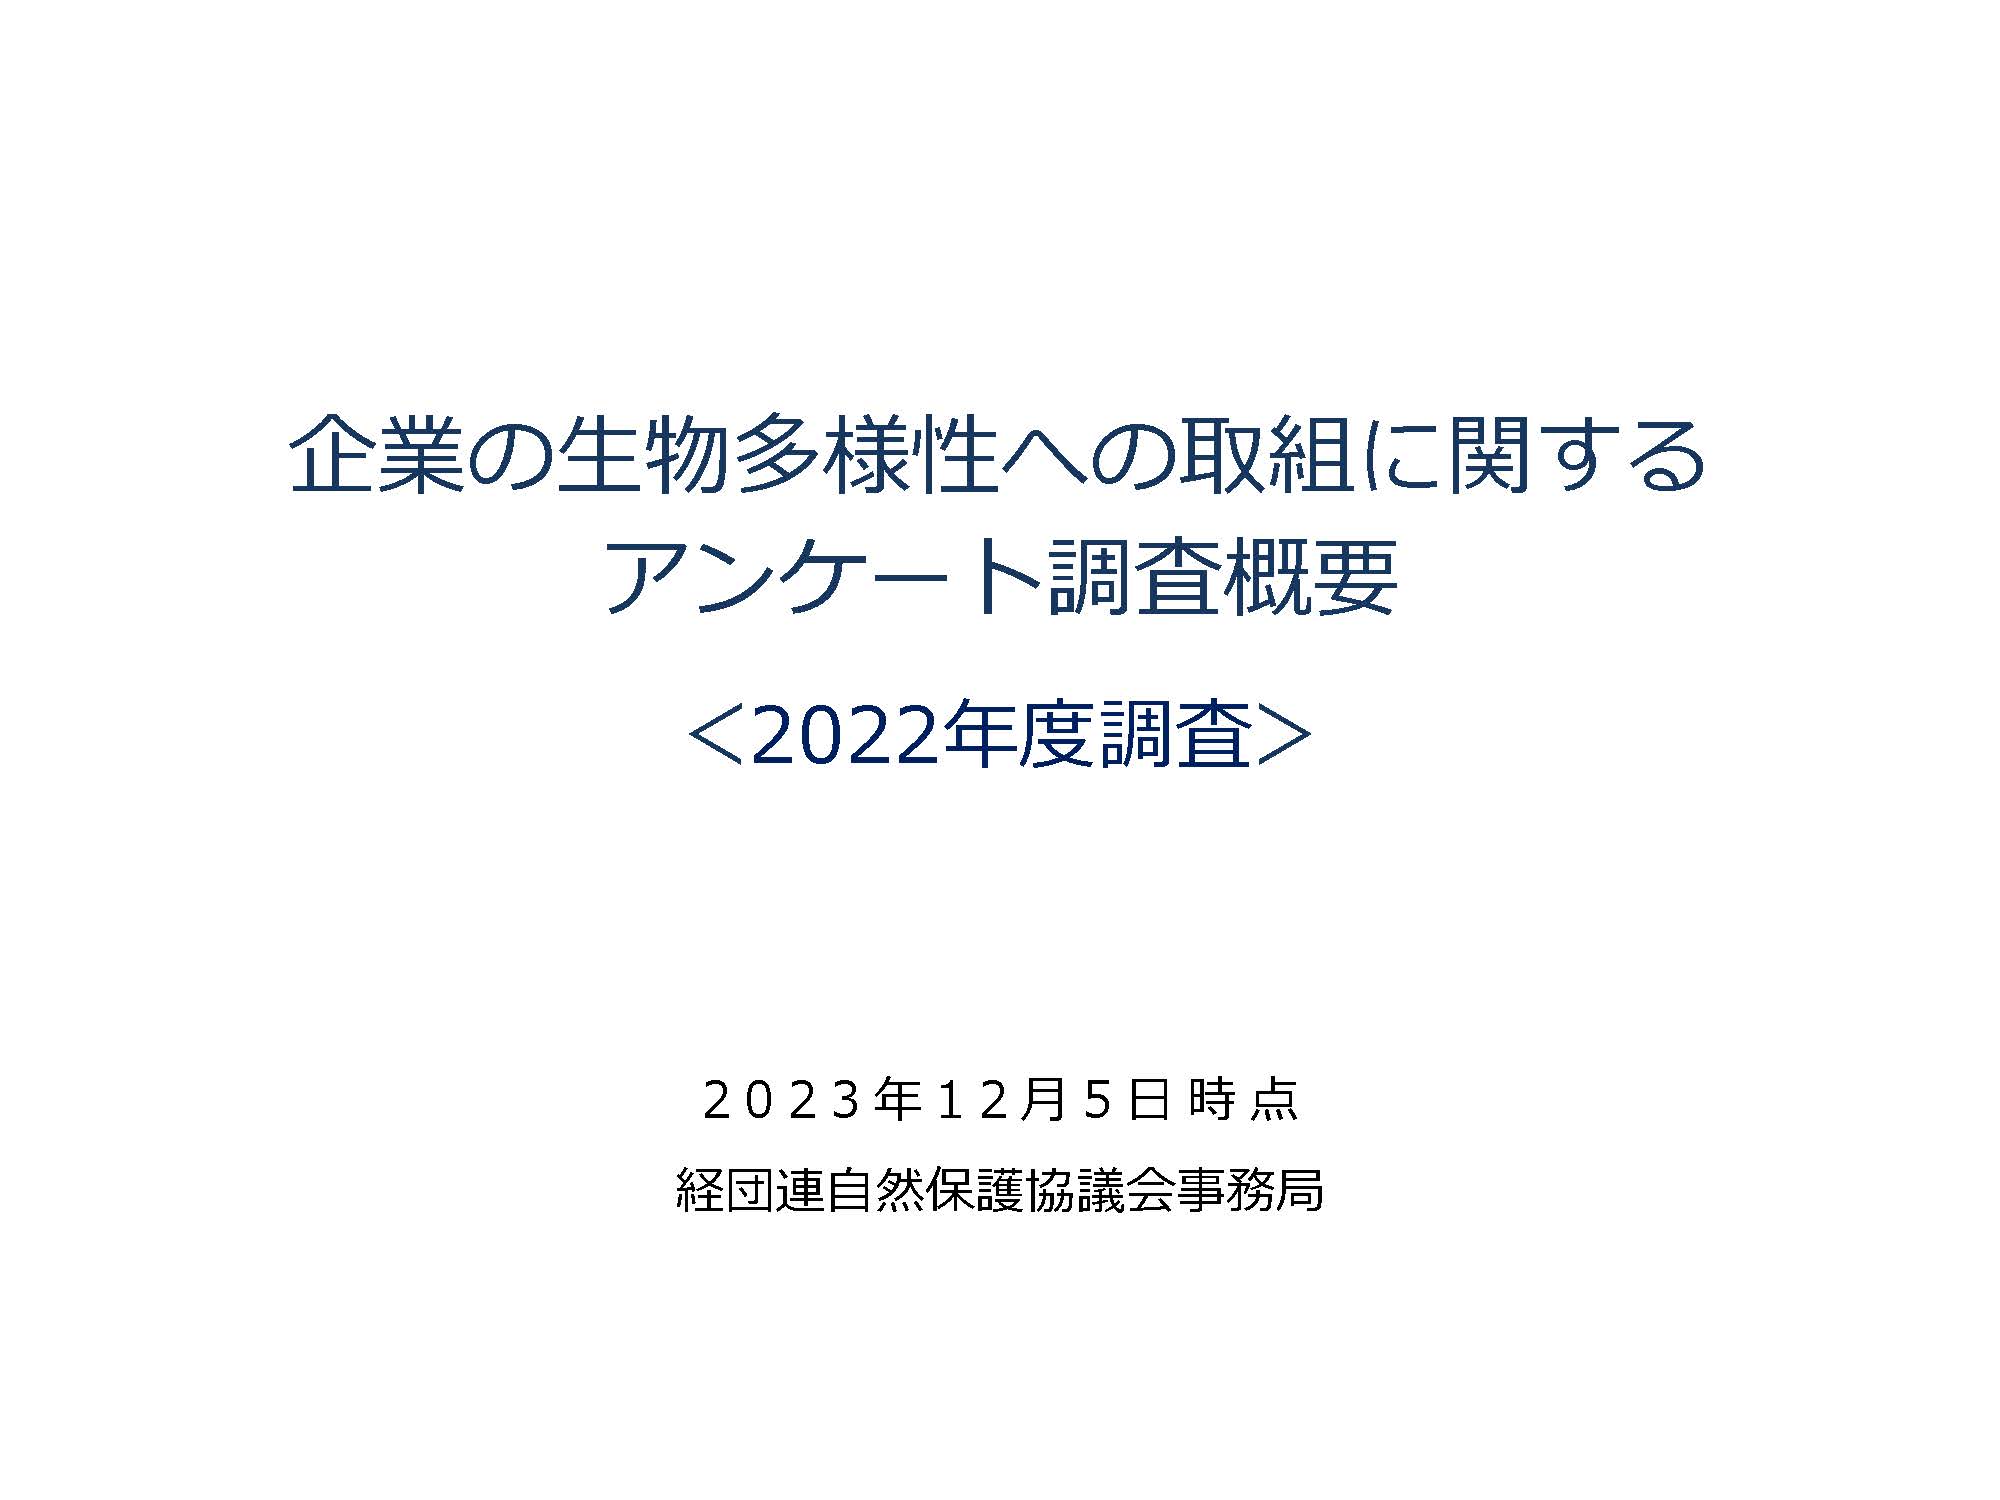 Keidanren-survey-fy2022-slides-j-cover